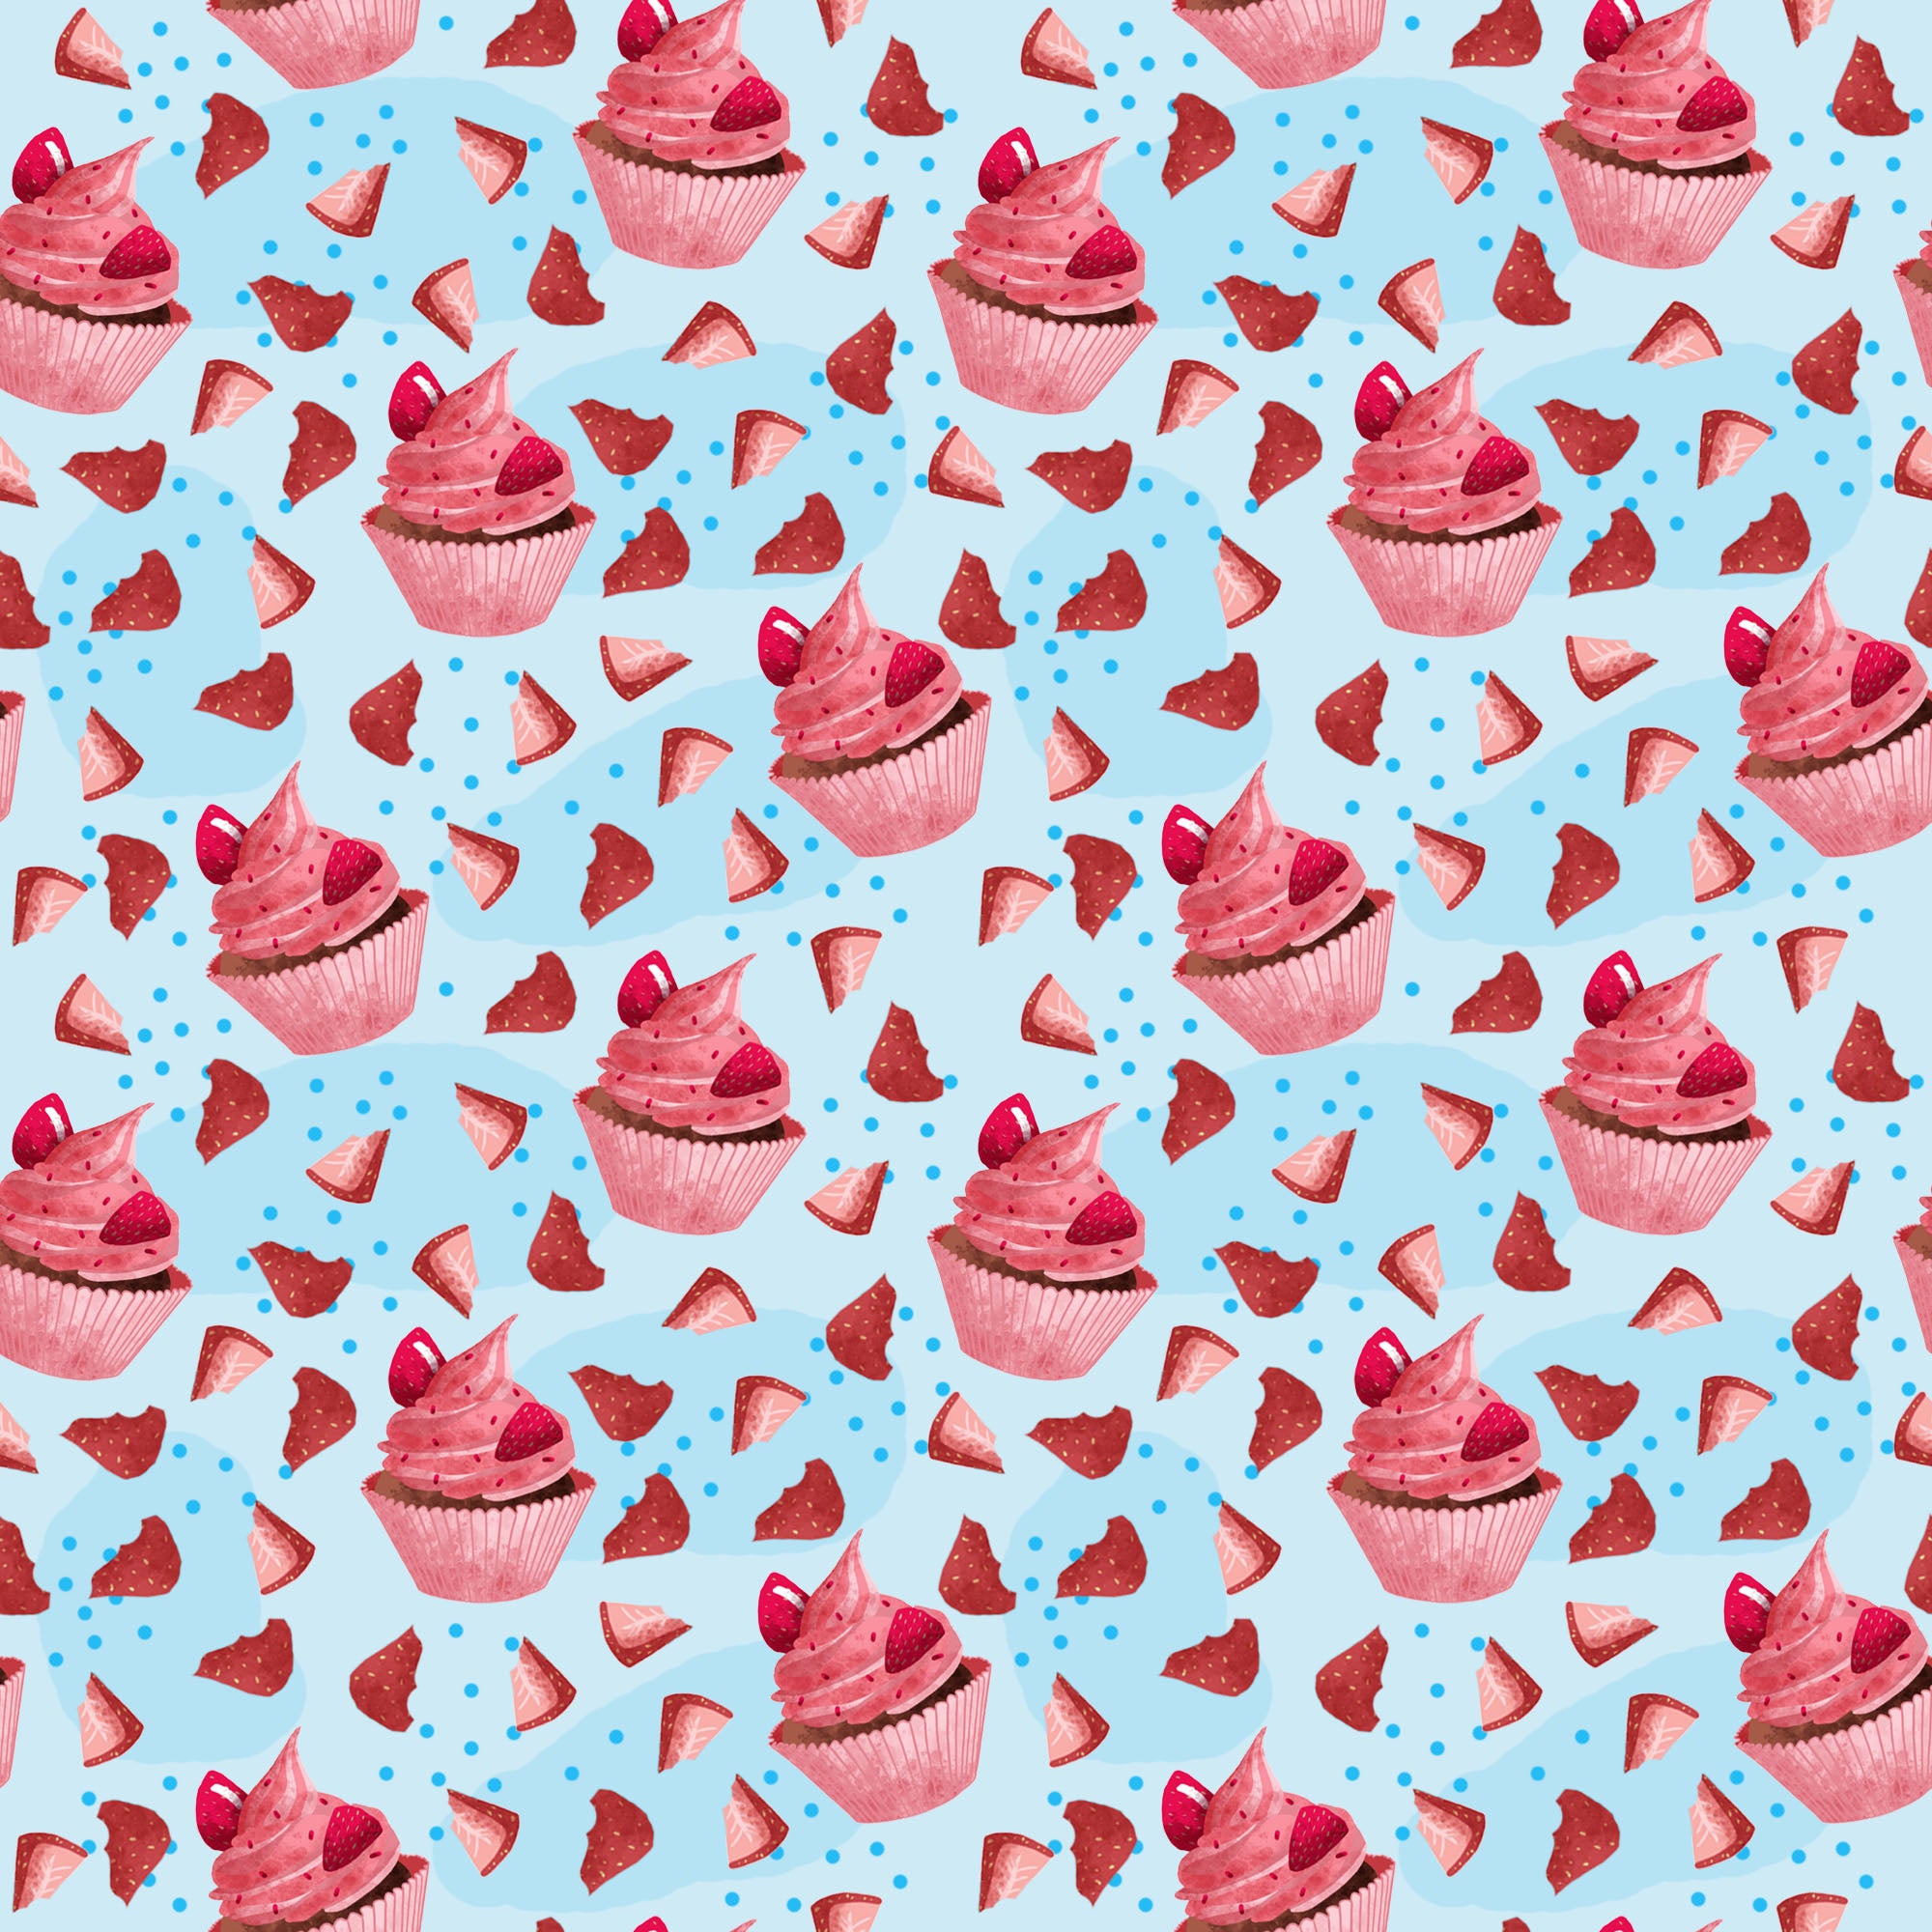 strawberry cupcake surface pattern design